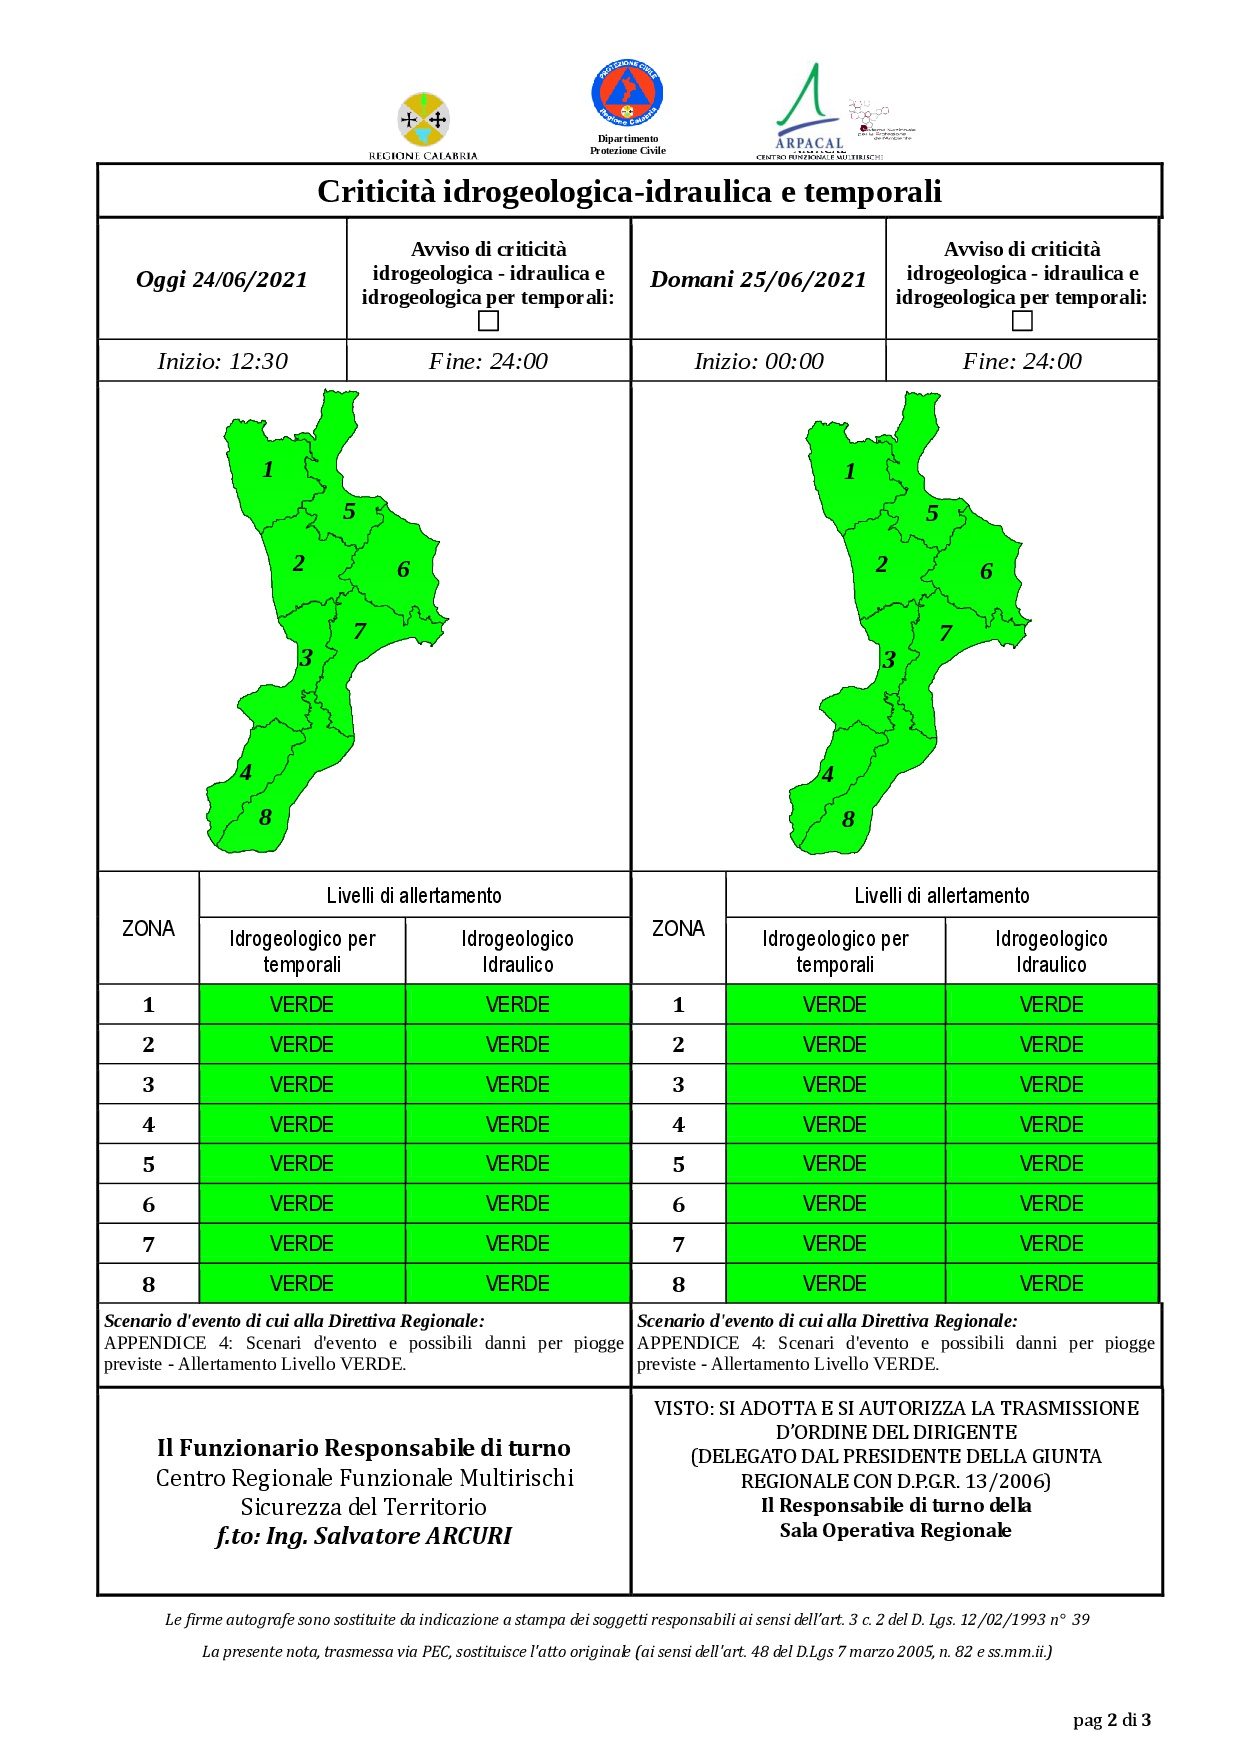 Criticità idrogeologica-idraulica e temporali in Calabria 24-06-2021